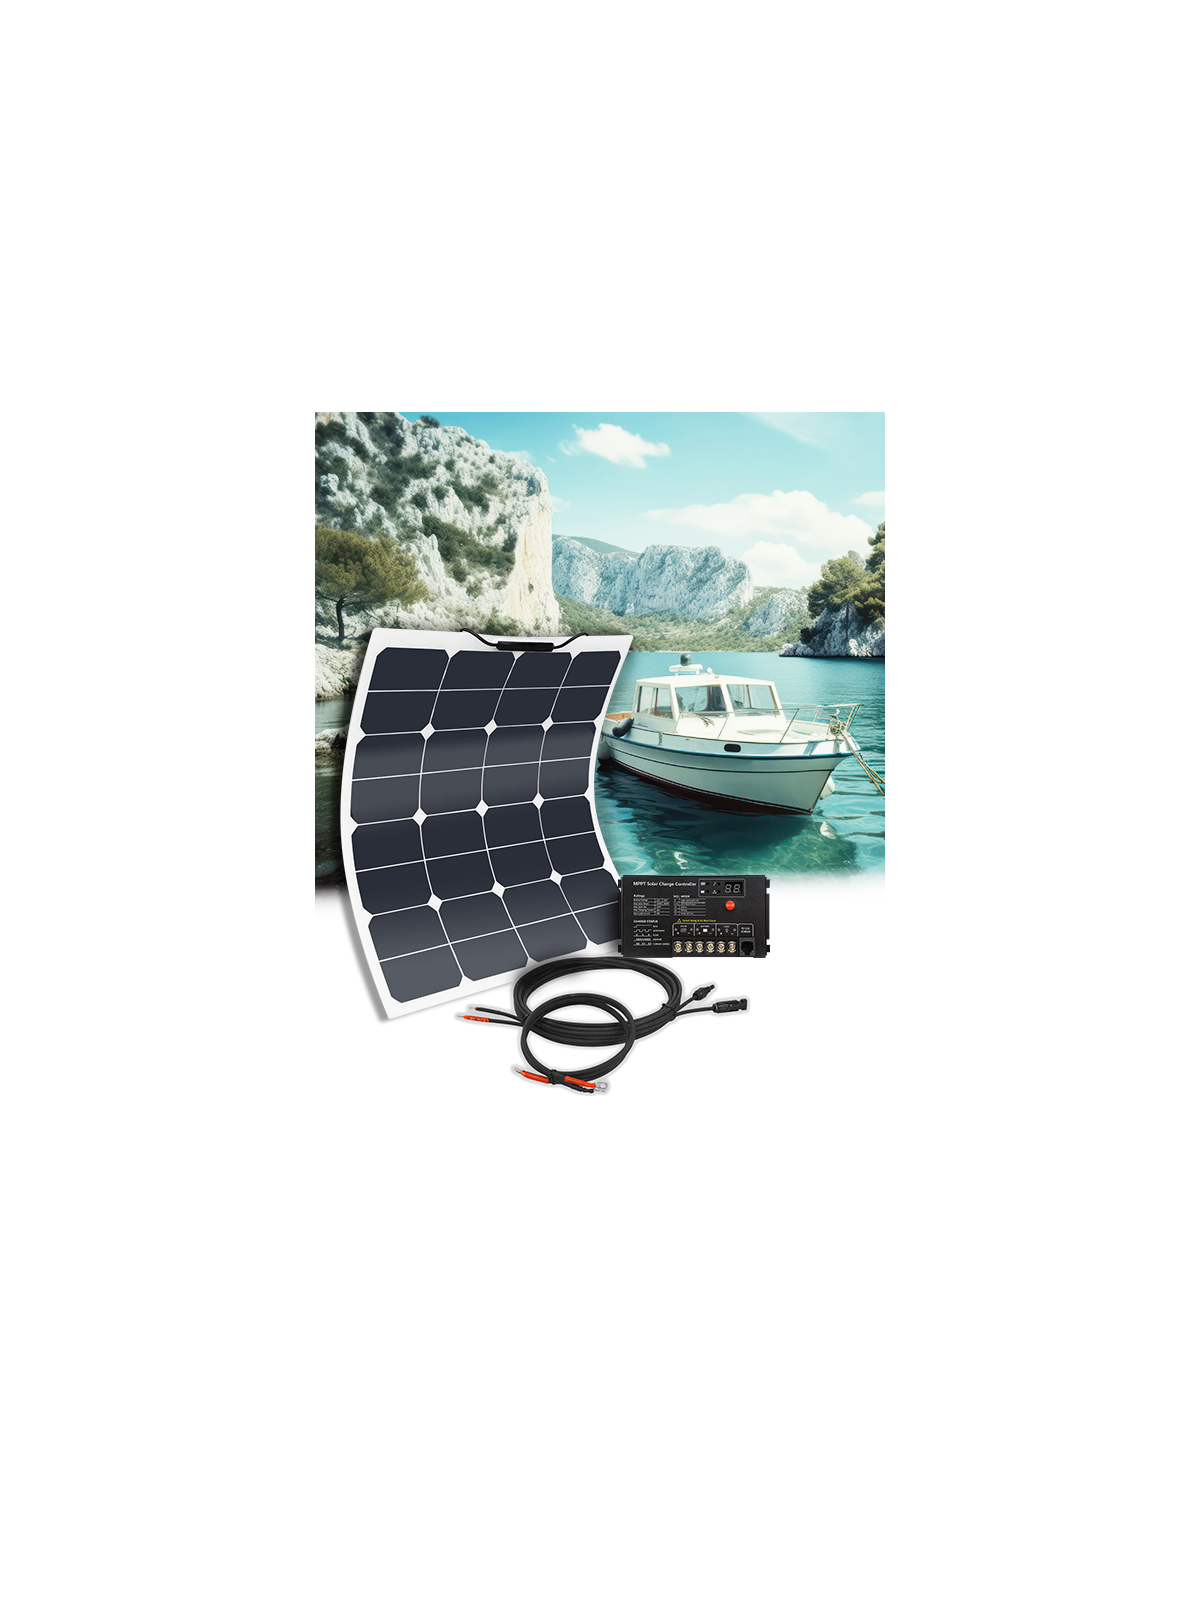 Kit Solar 12v 1000whdia caravana o barco